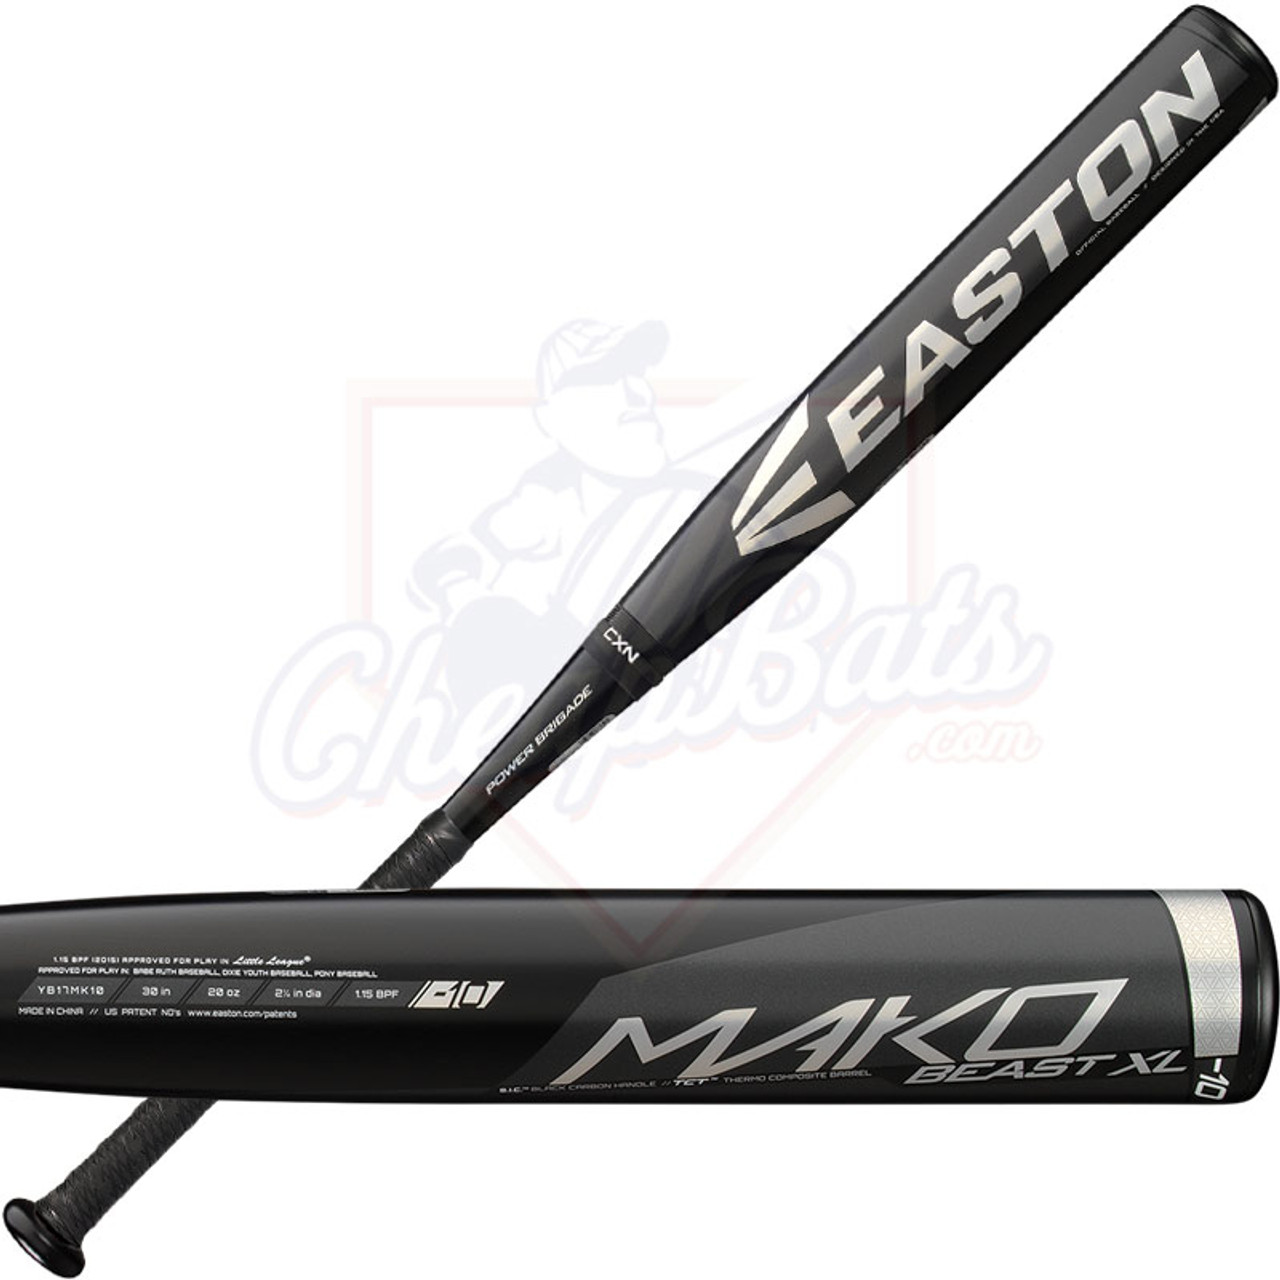 Easton Mako Beast XL Youth Baseball Bat (-10) YB17MK10 - RARE 